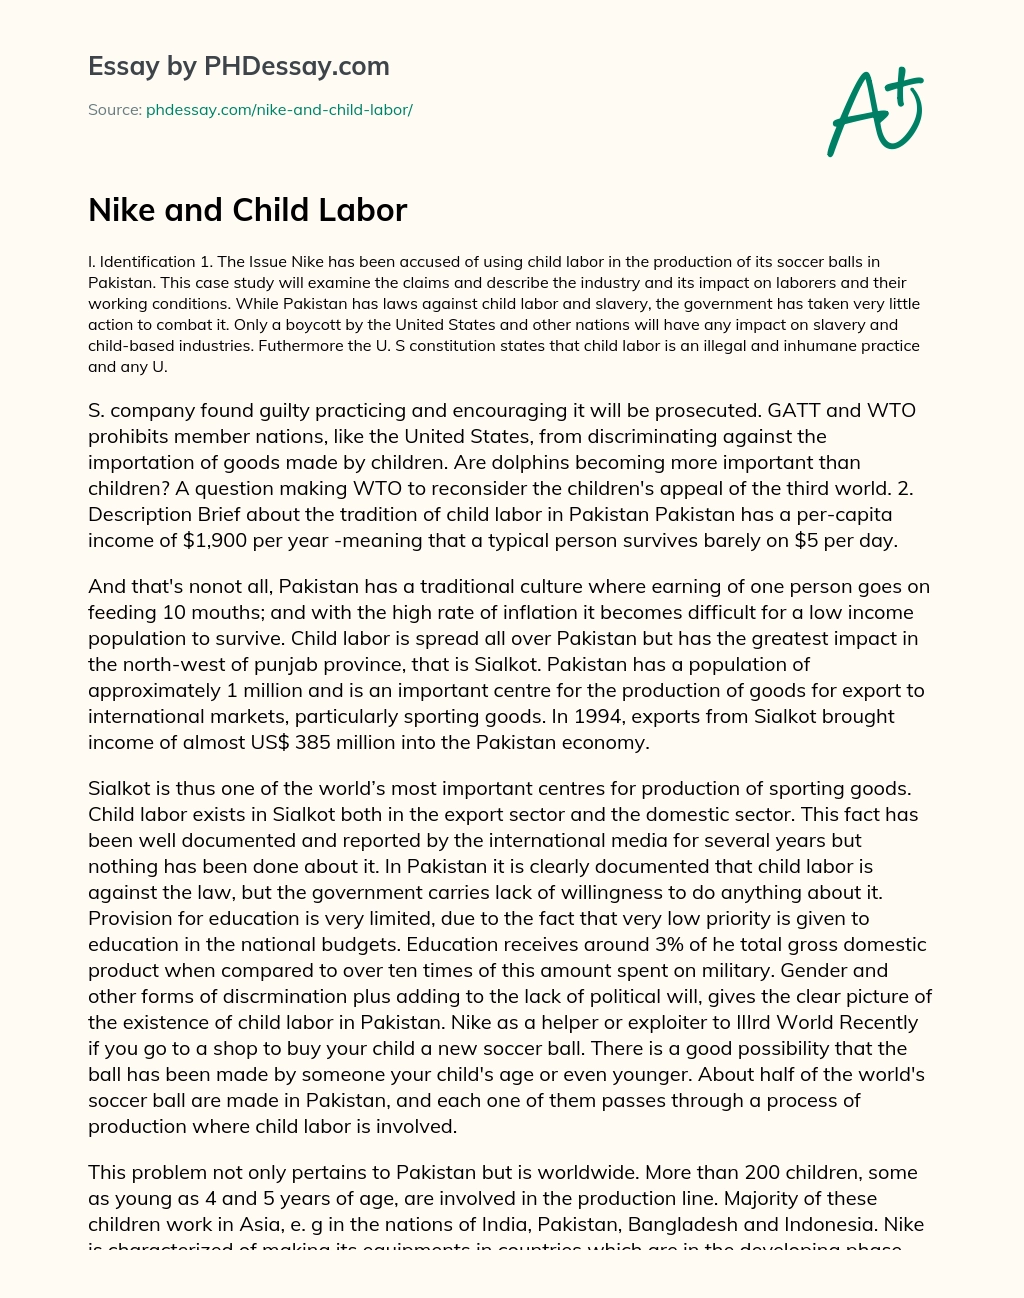 Nike and Child Labor essay